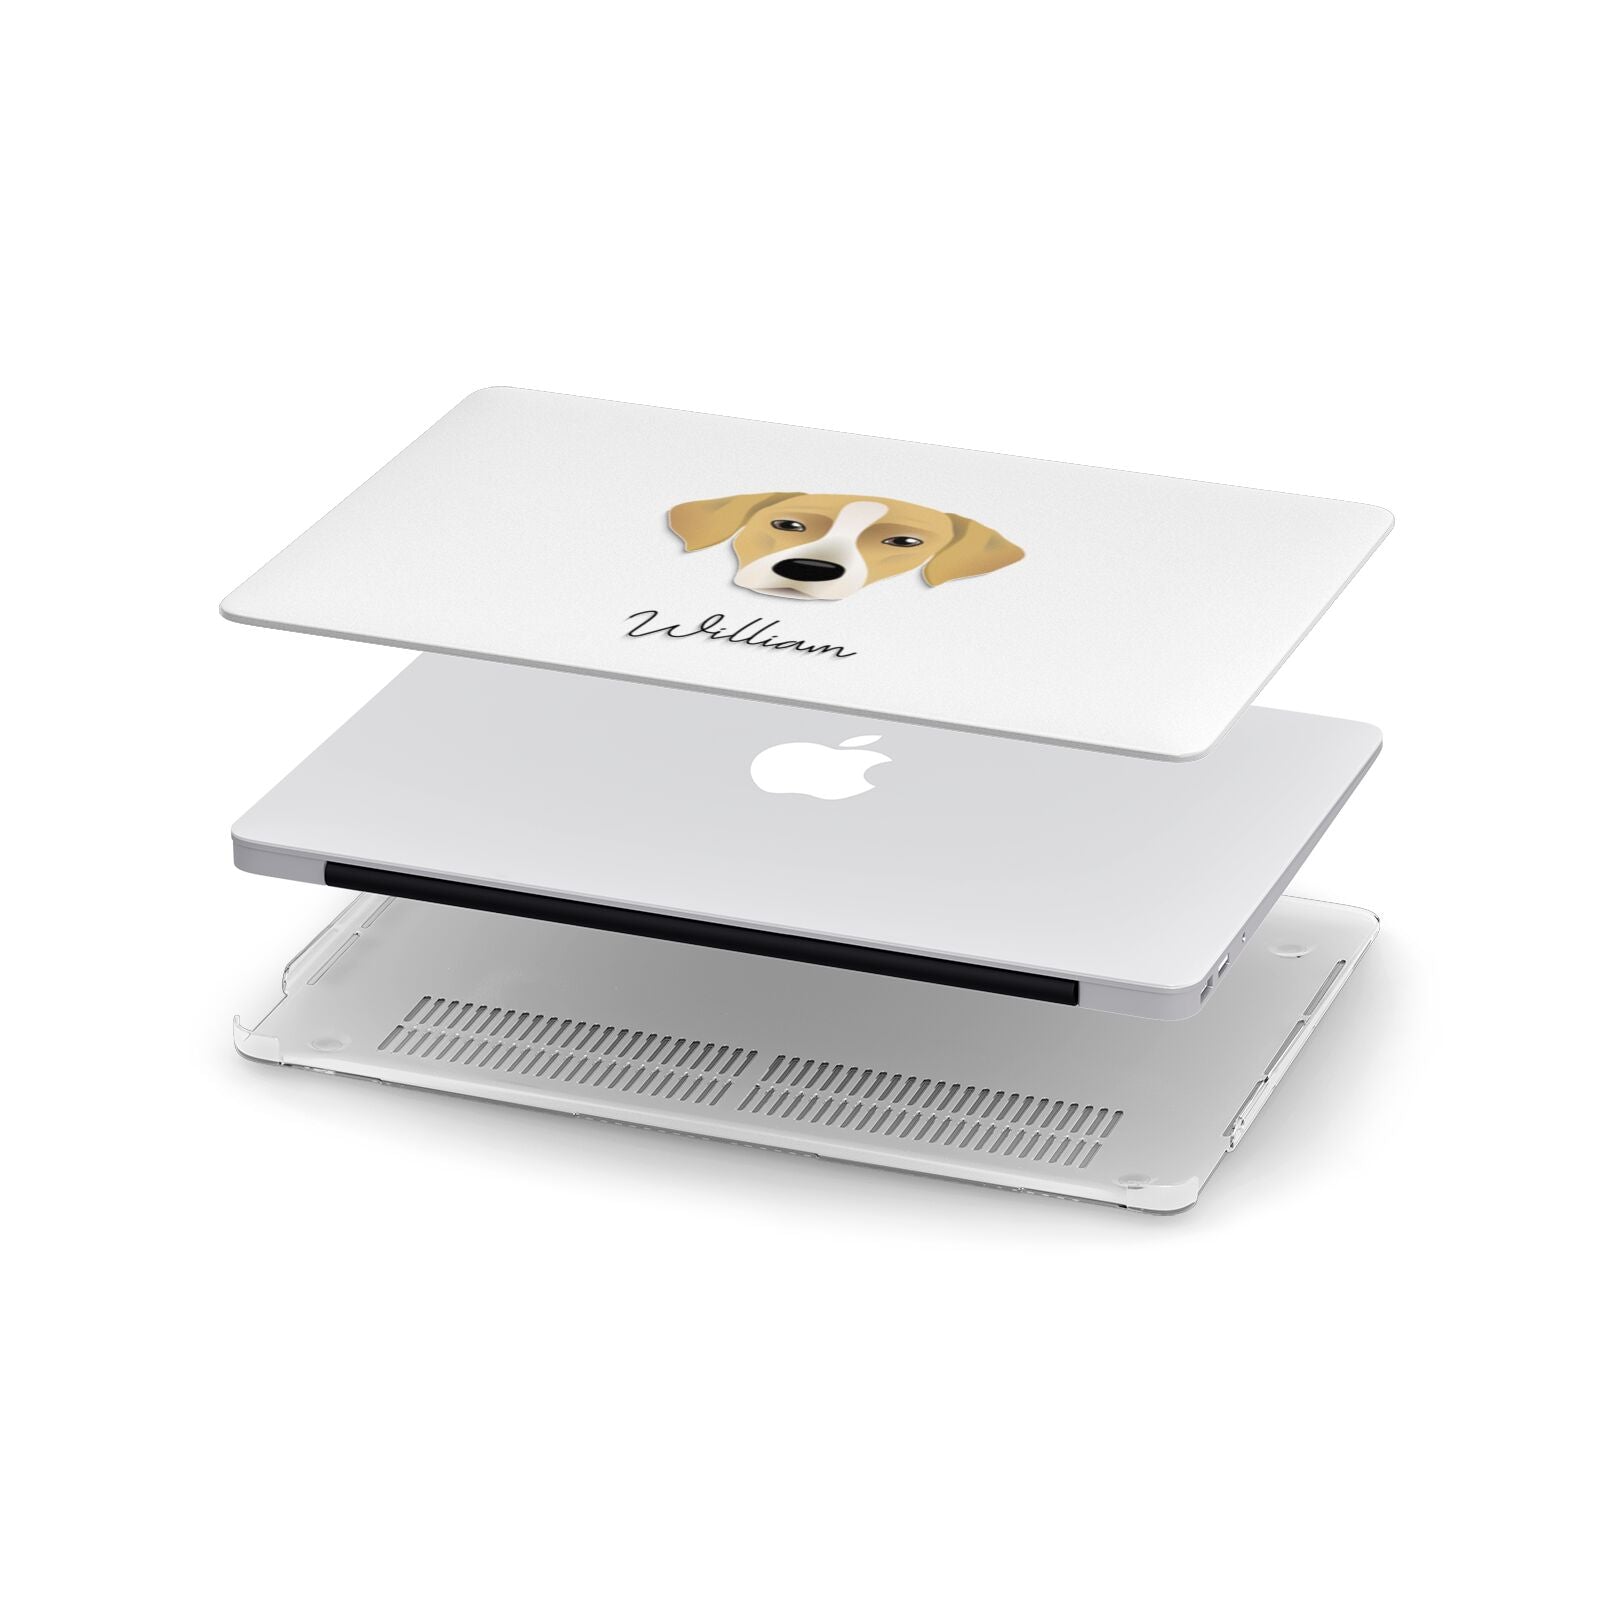 Borador Personalised Apple MacBook Case in Detail